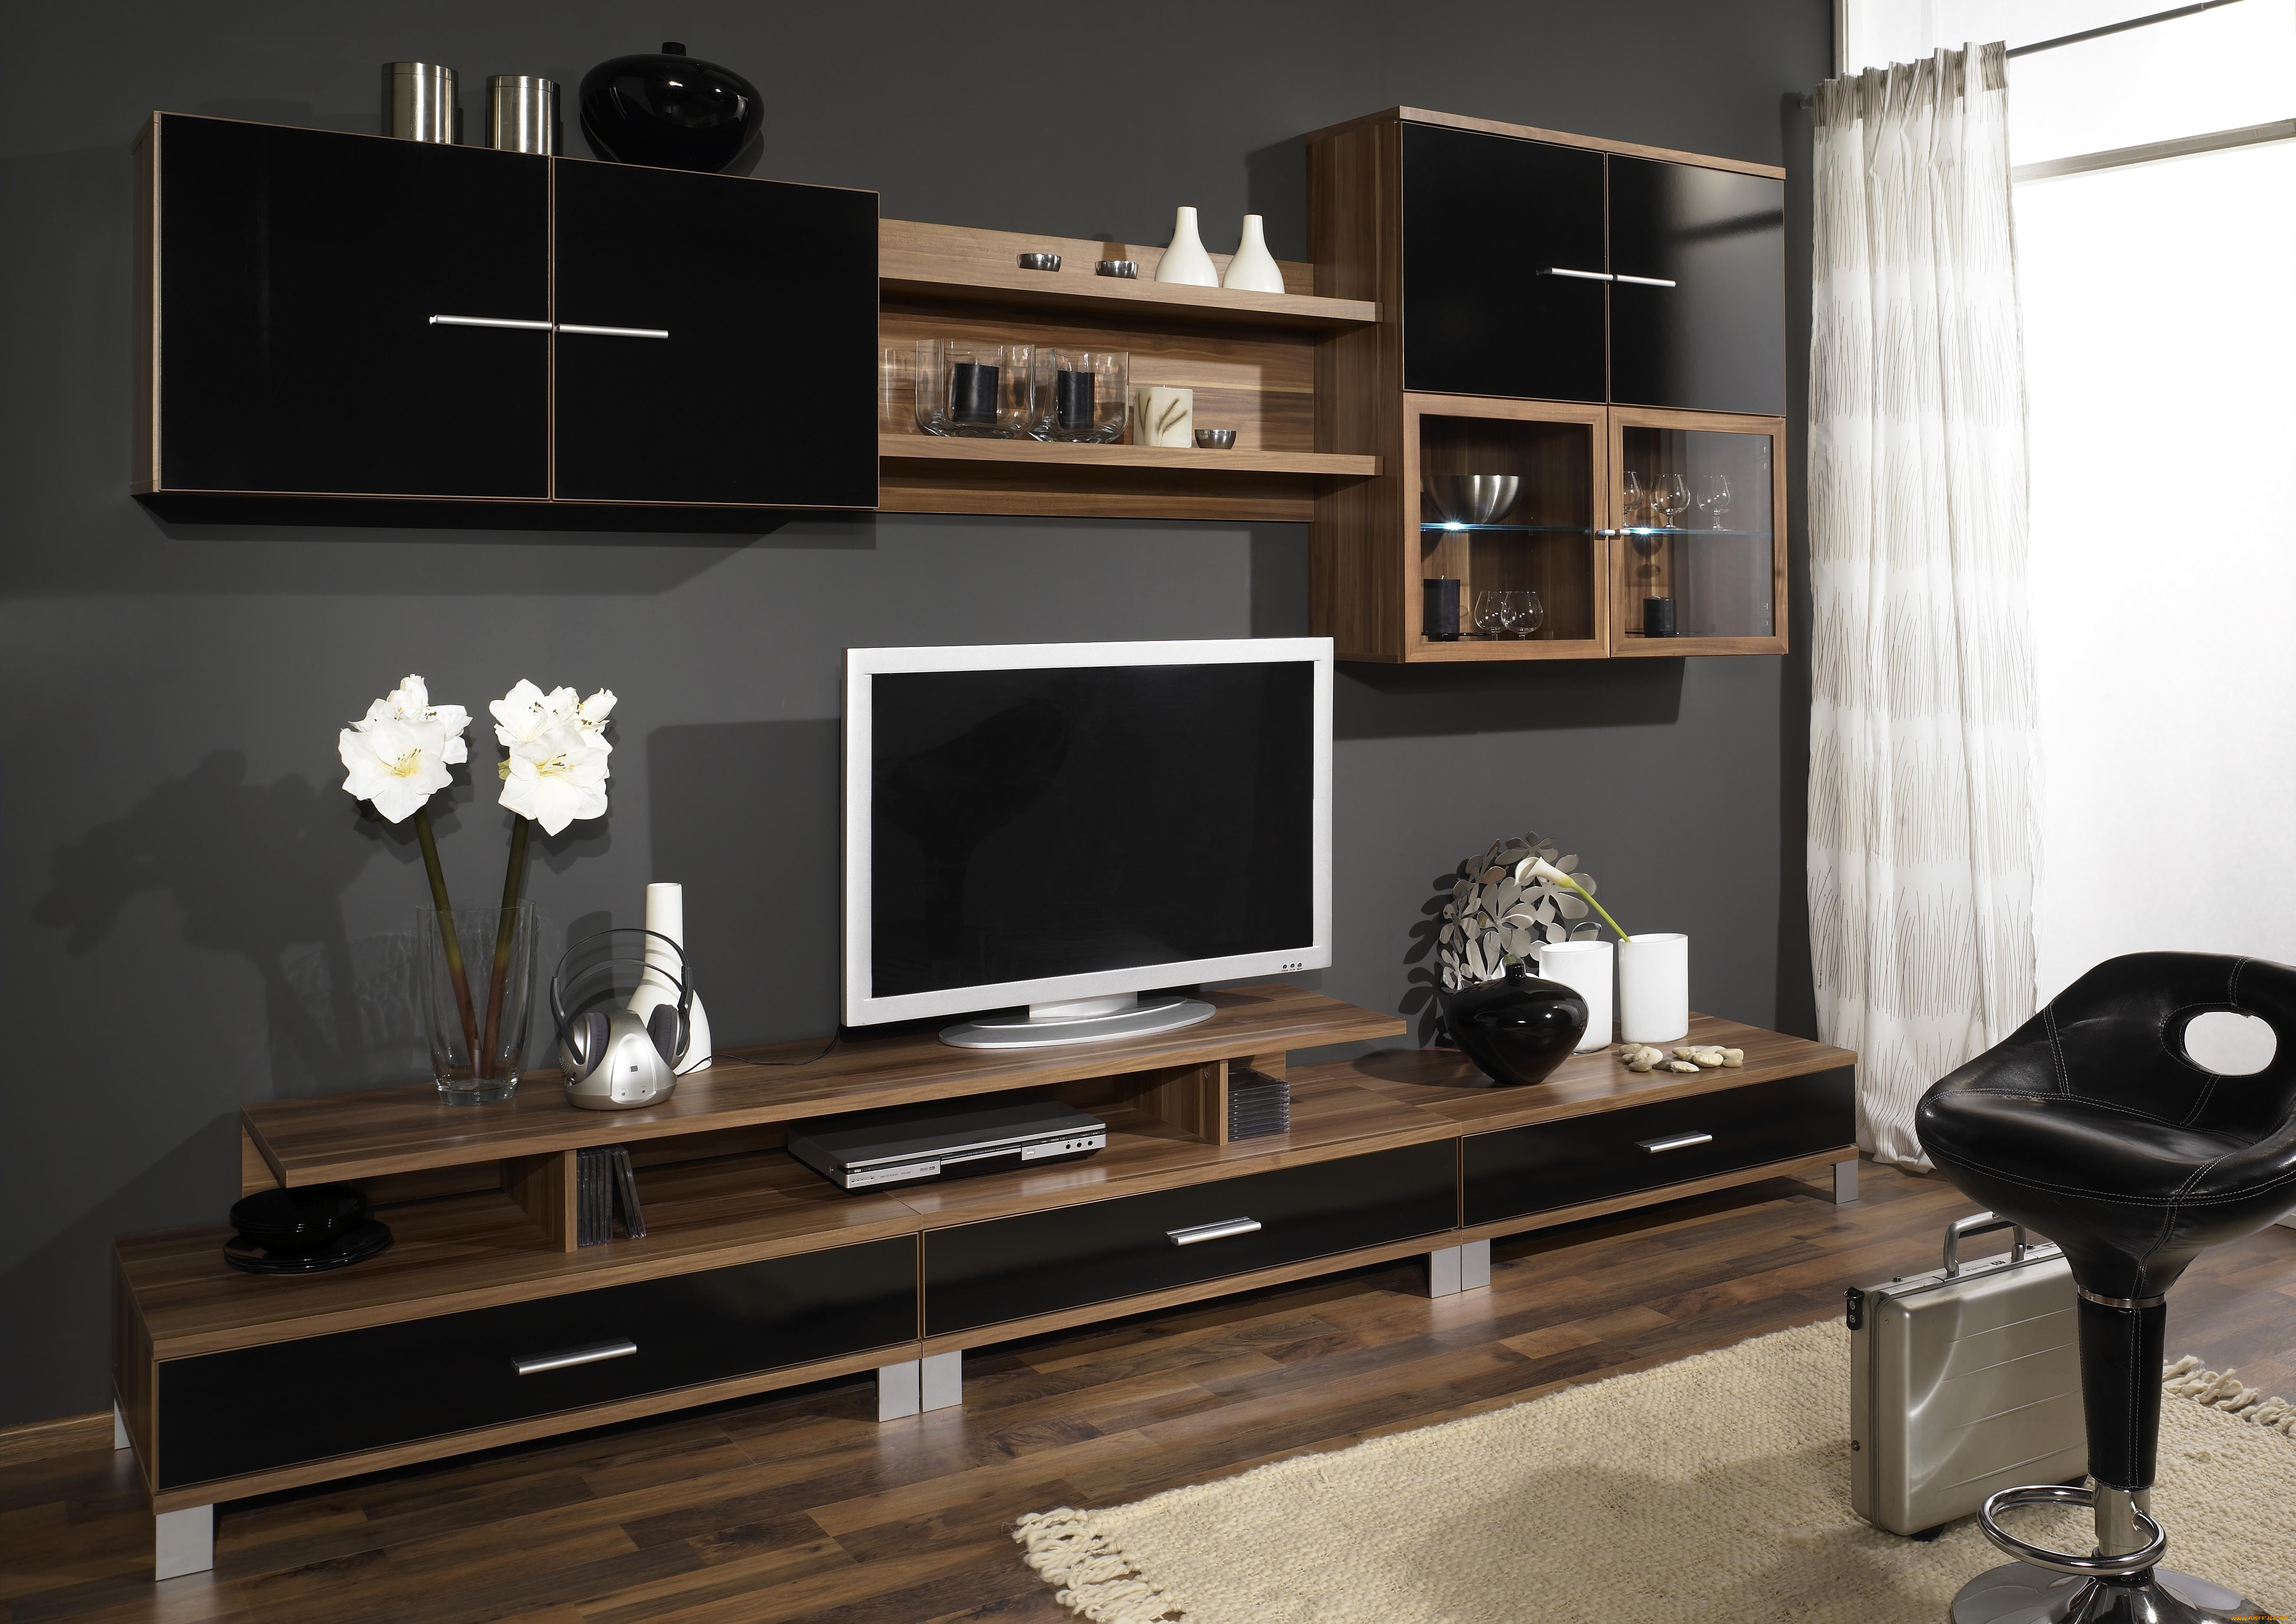 интерьер, гостиная, дерево, коричневый, телевизор, стенка, дизайн, комната, мебель, шкаф